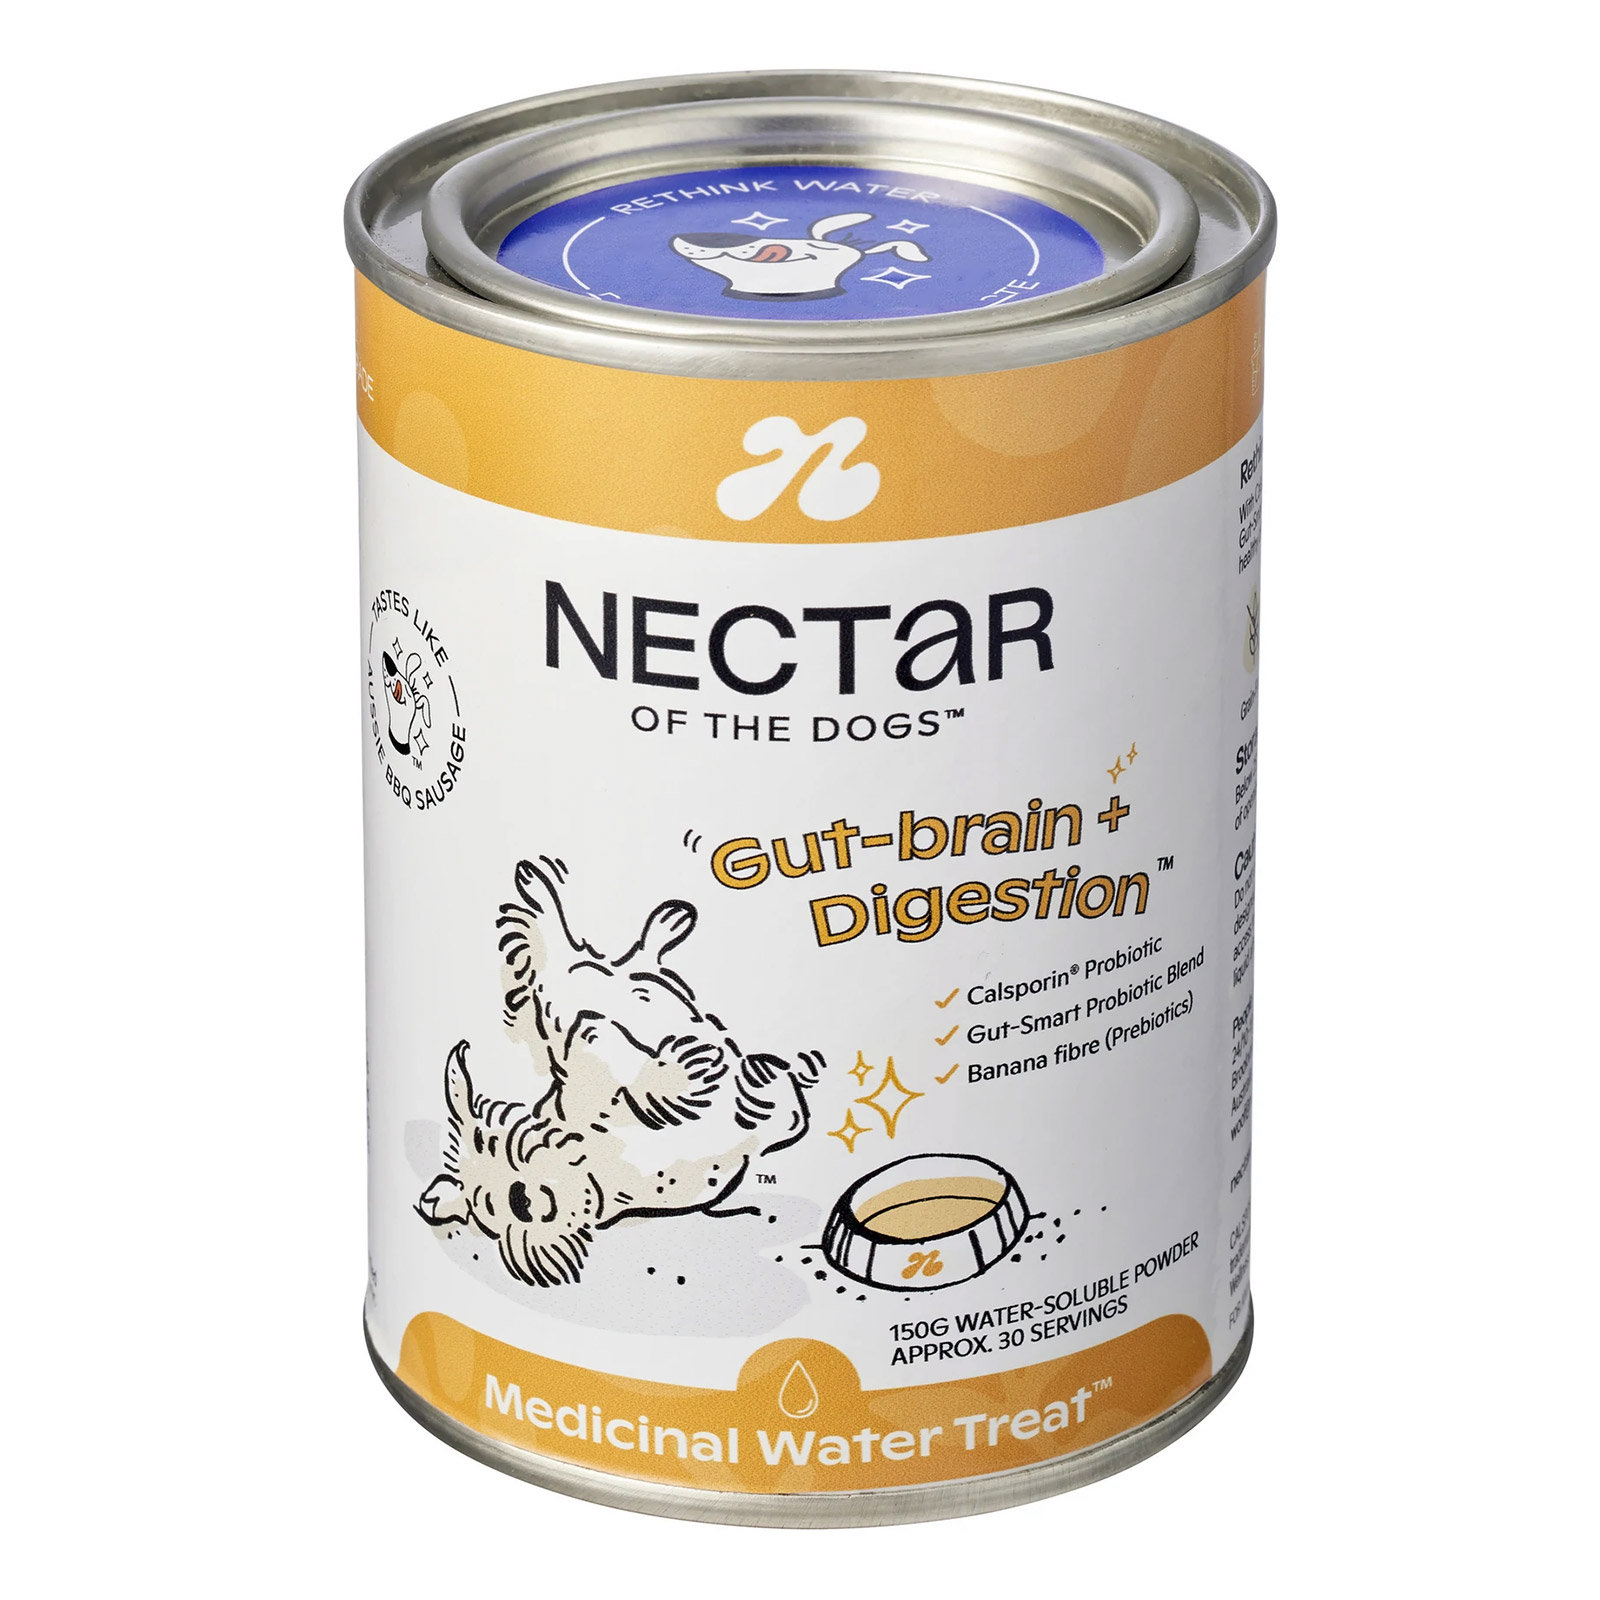 Nectar Gut Brain & Digestion Powder for Dogs